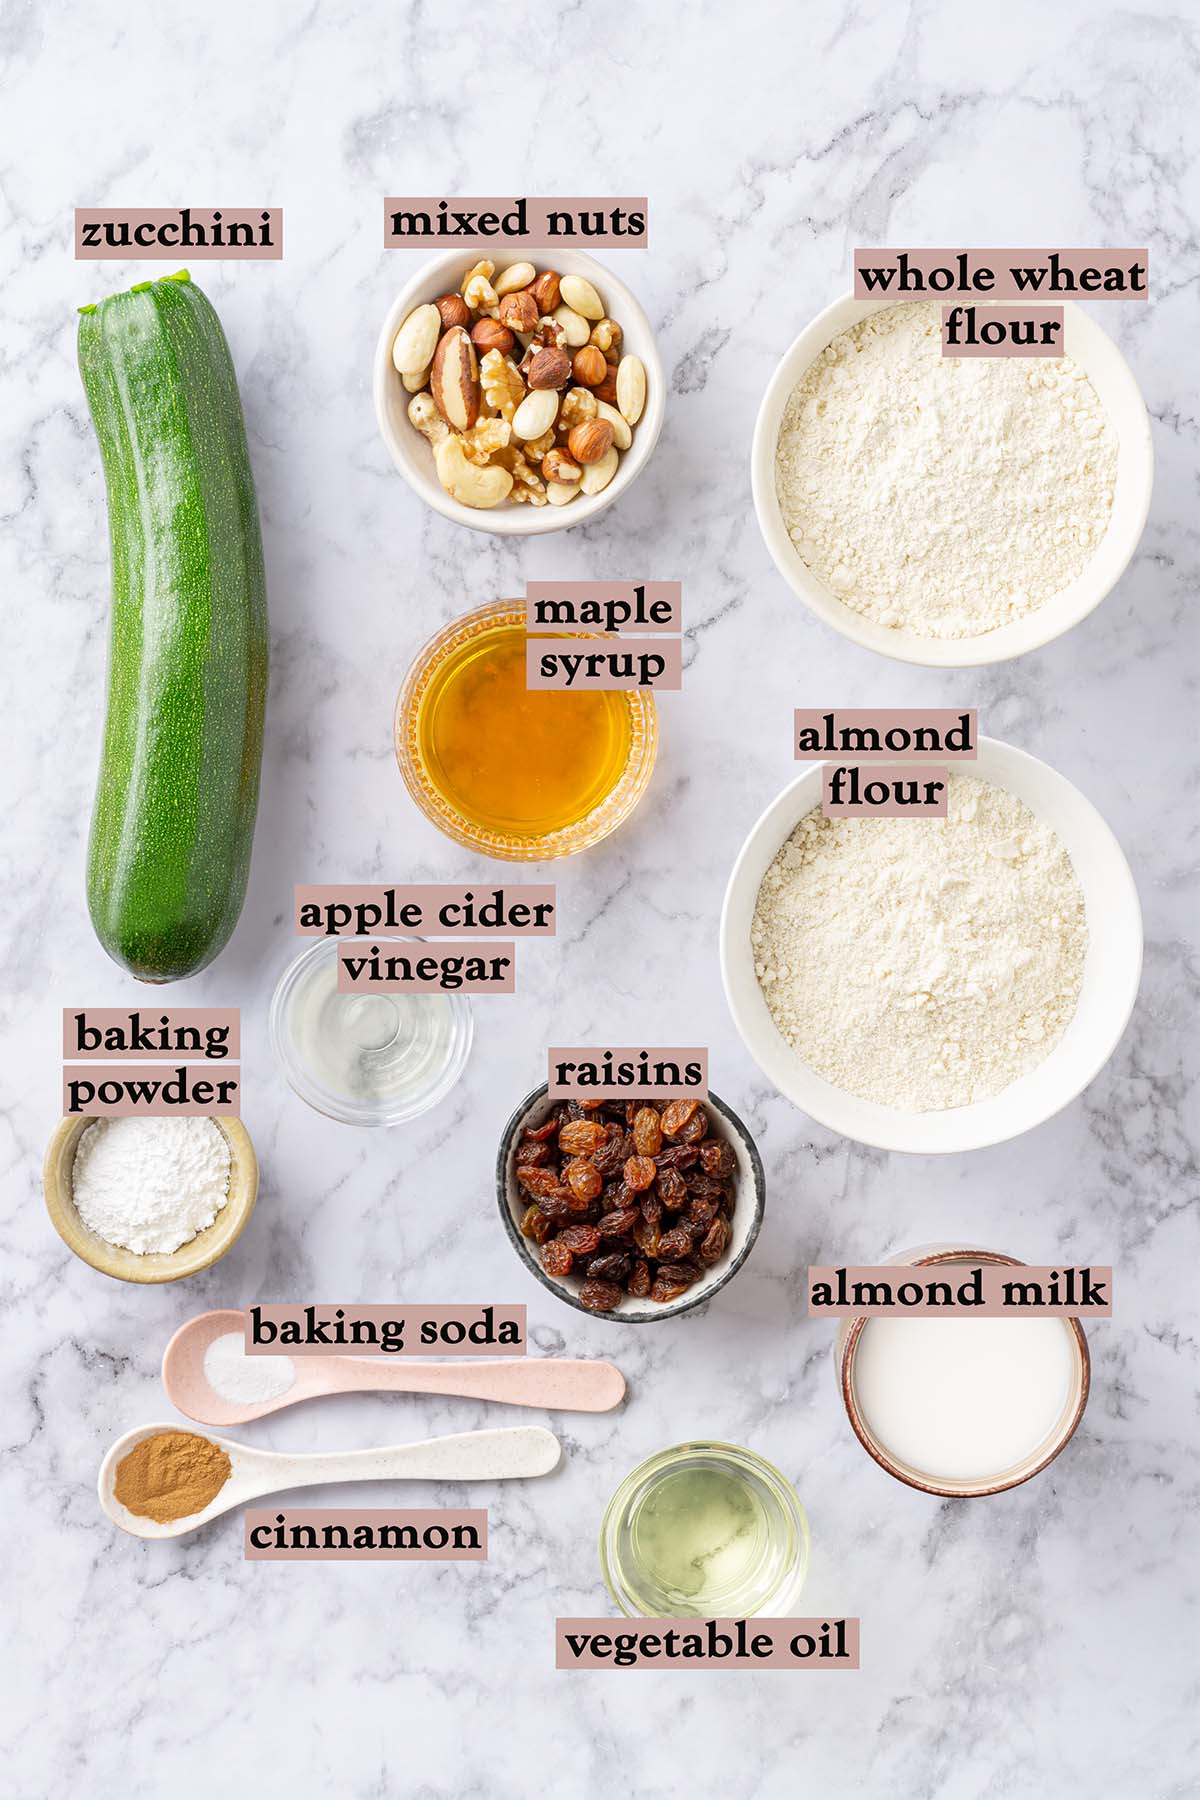 Ingredients for Vegan Zucchini Muffins